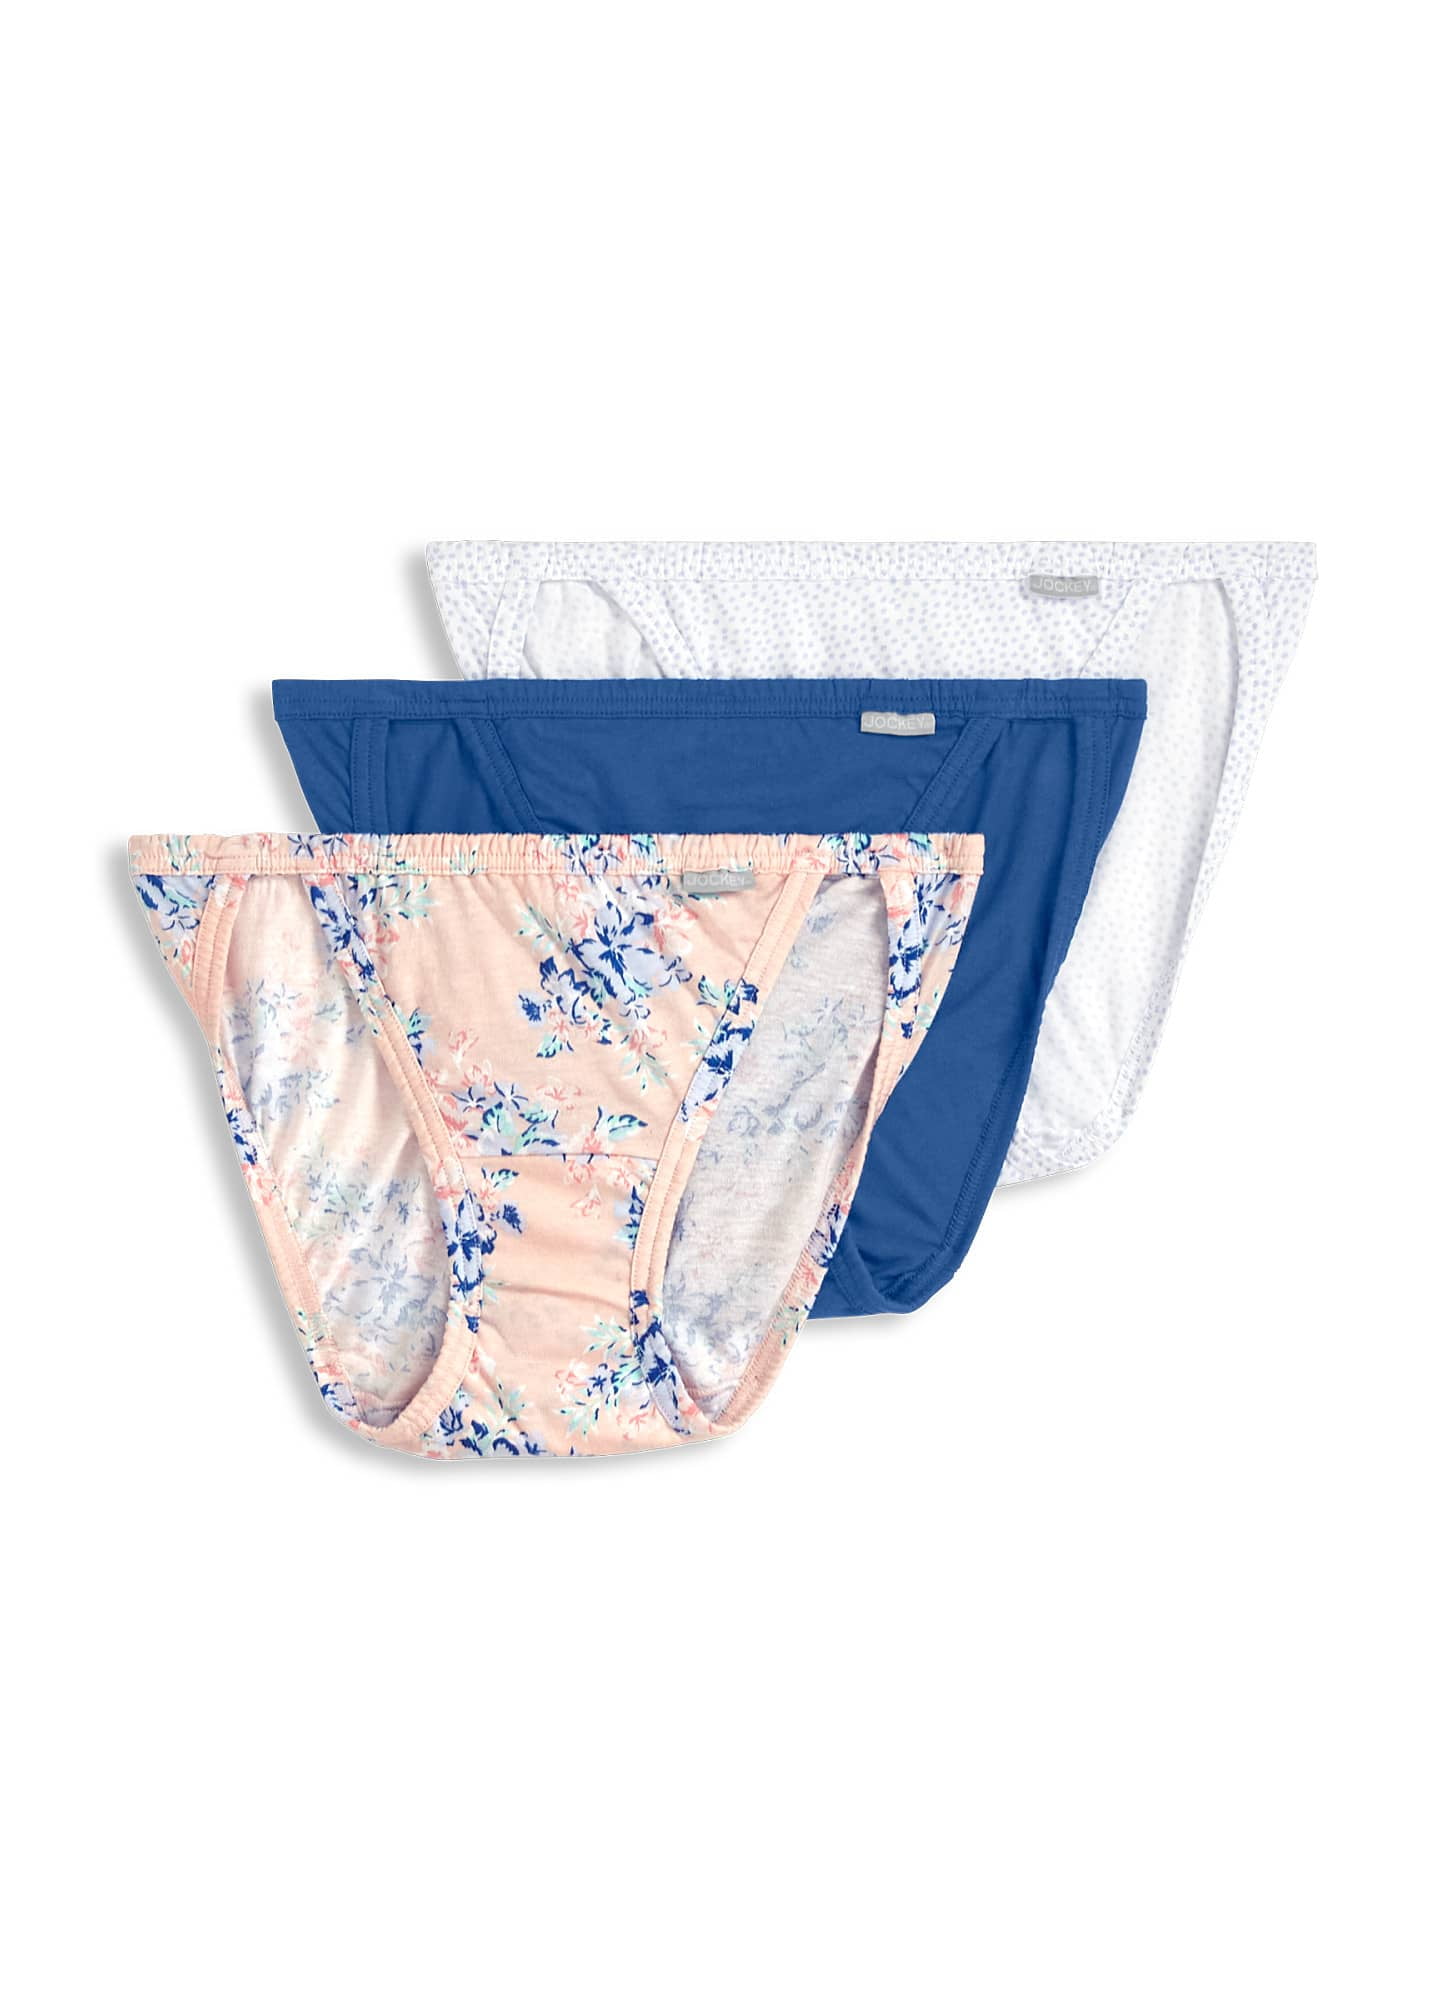 Jockey Elance String Bikini Underwear 3 Pack 1483 Grey Heather/Charcoa –  CheapUndies